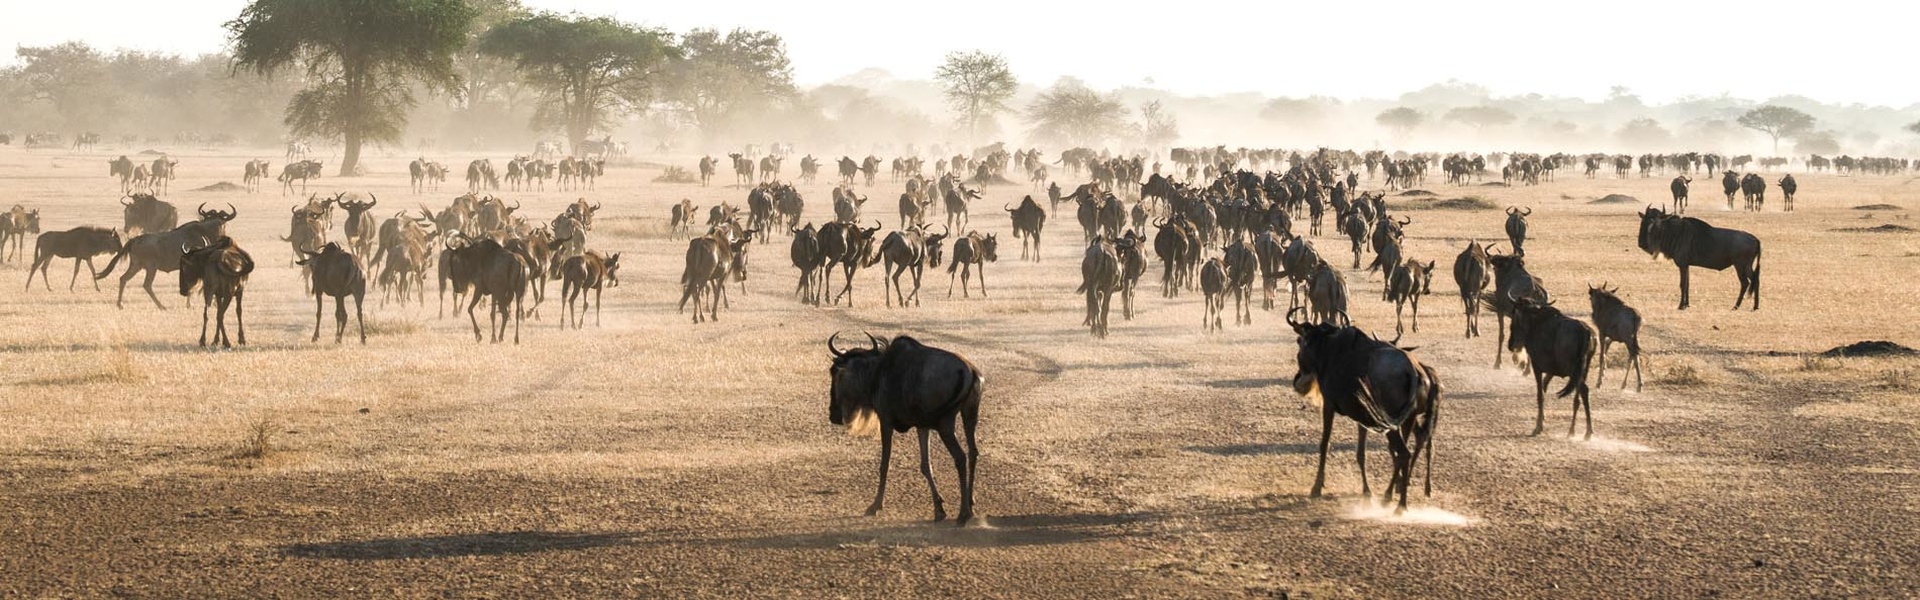 Safari spécial migration | Sous l'Acacia